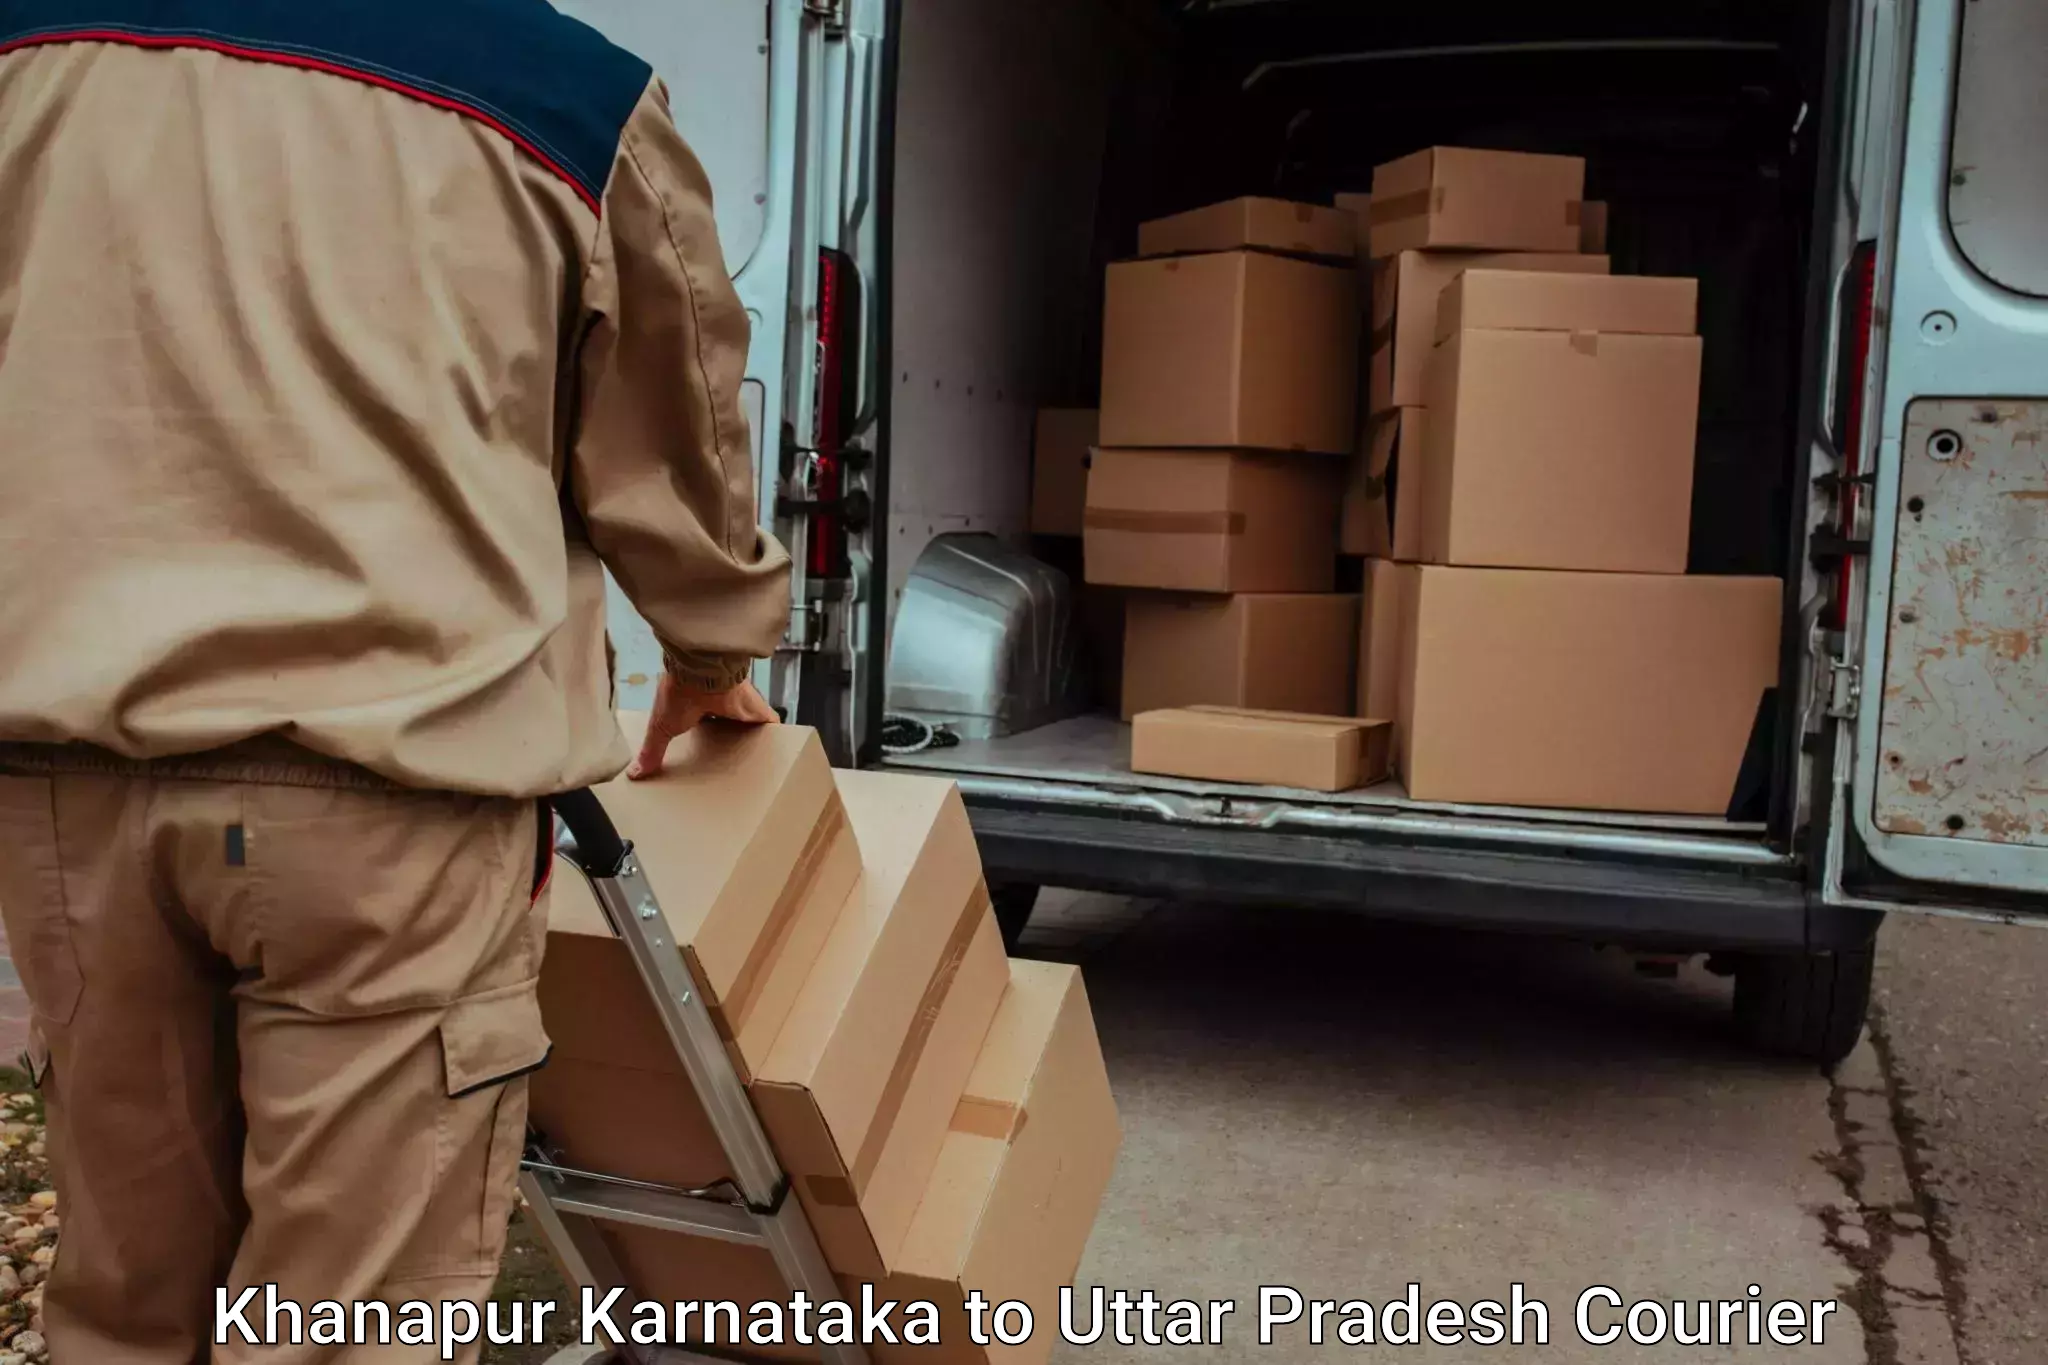 Budget-friendly movers Khanapur Karnataka to Nagina